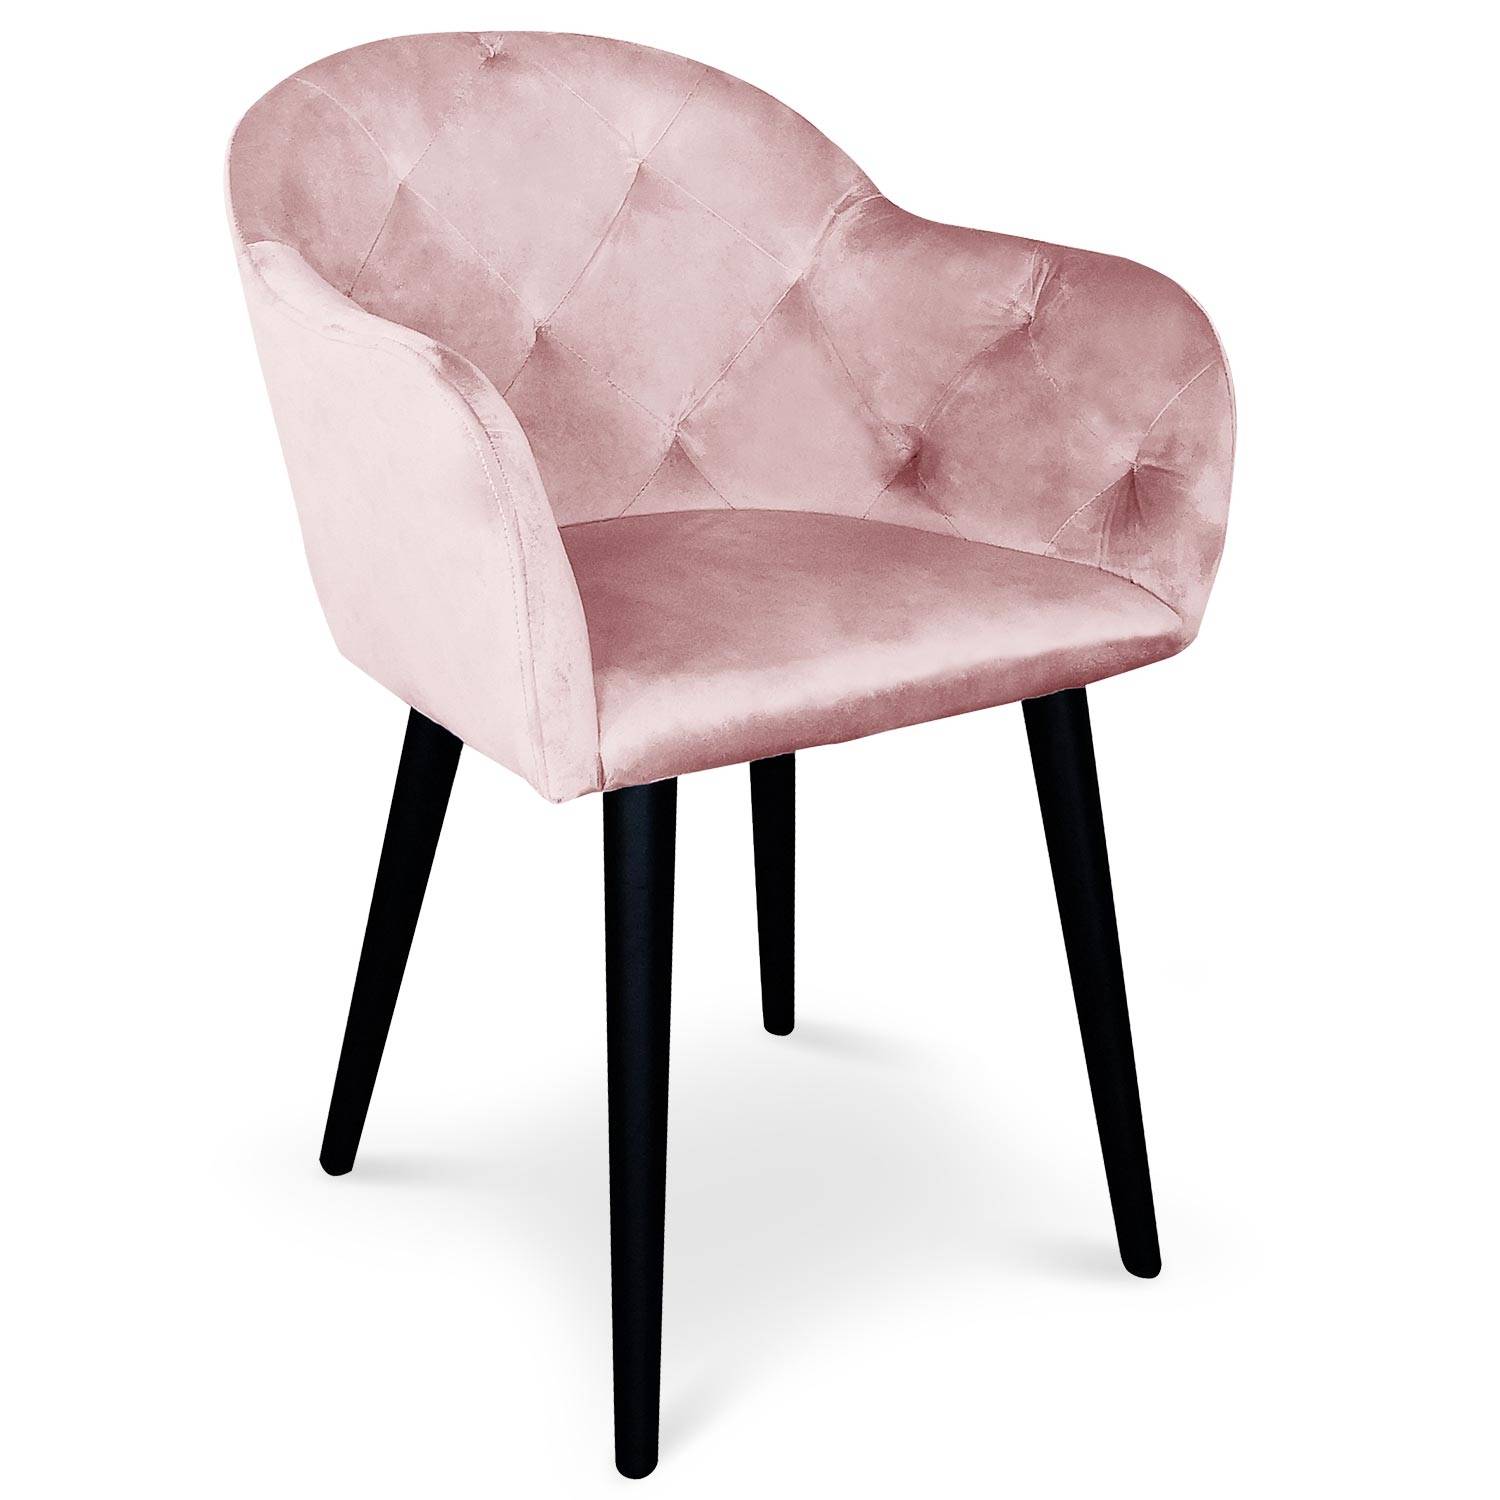 Honorine stoel / fauteuil roze fluweel